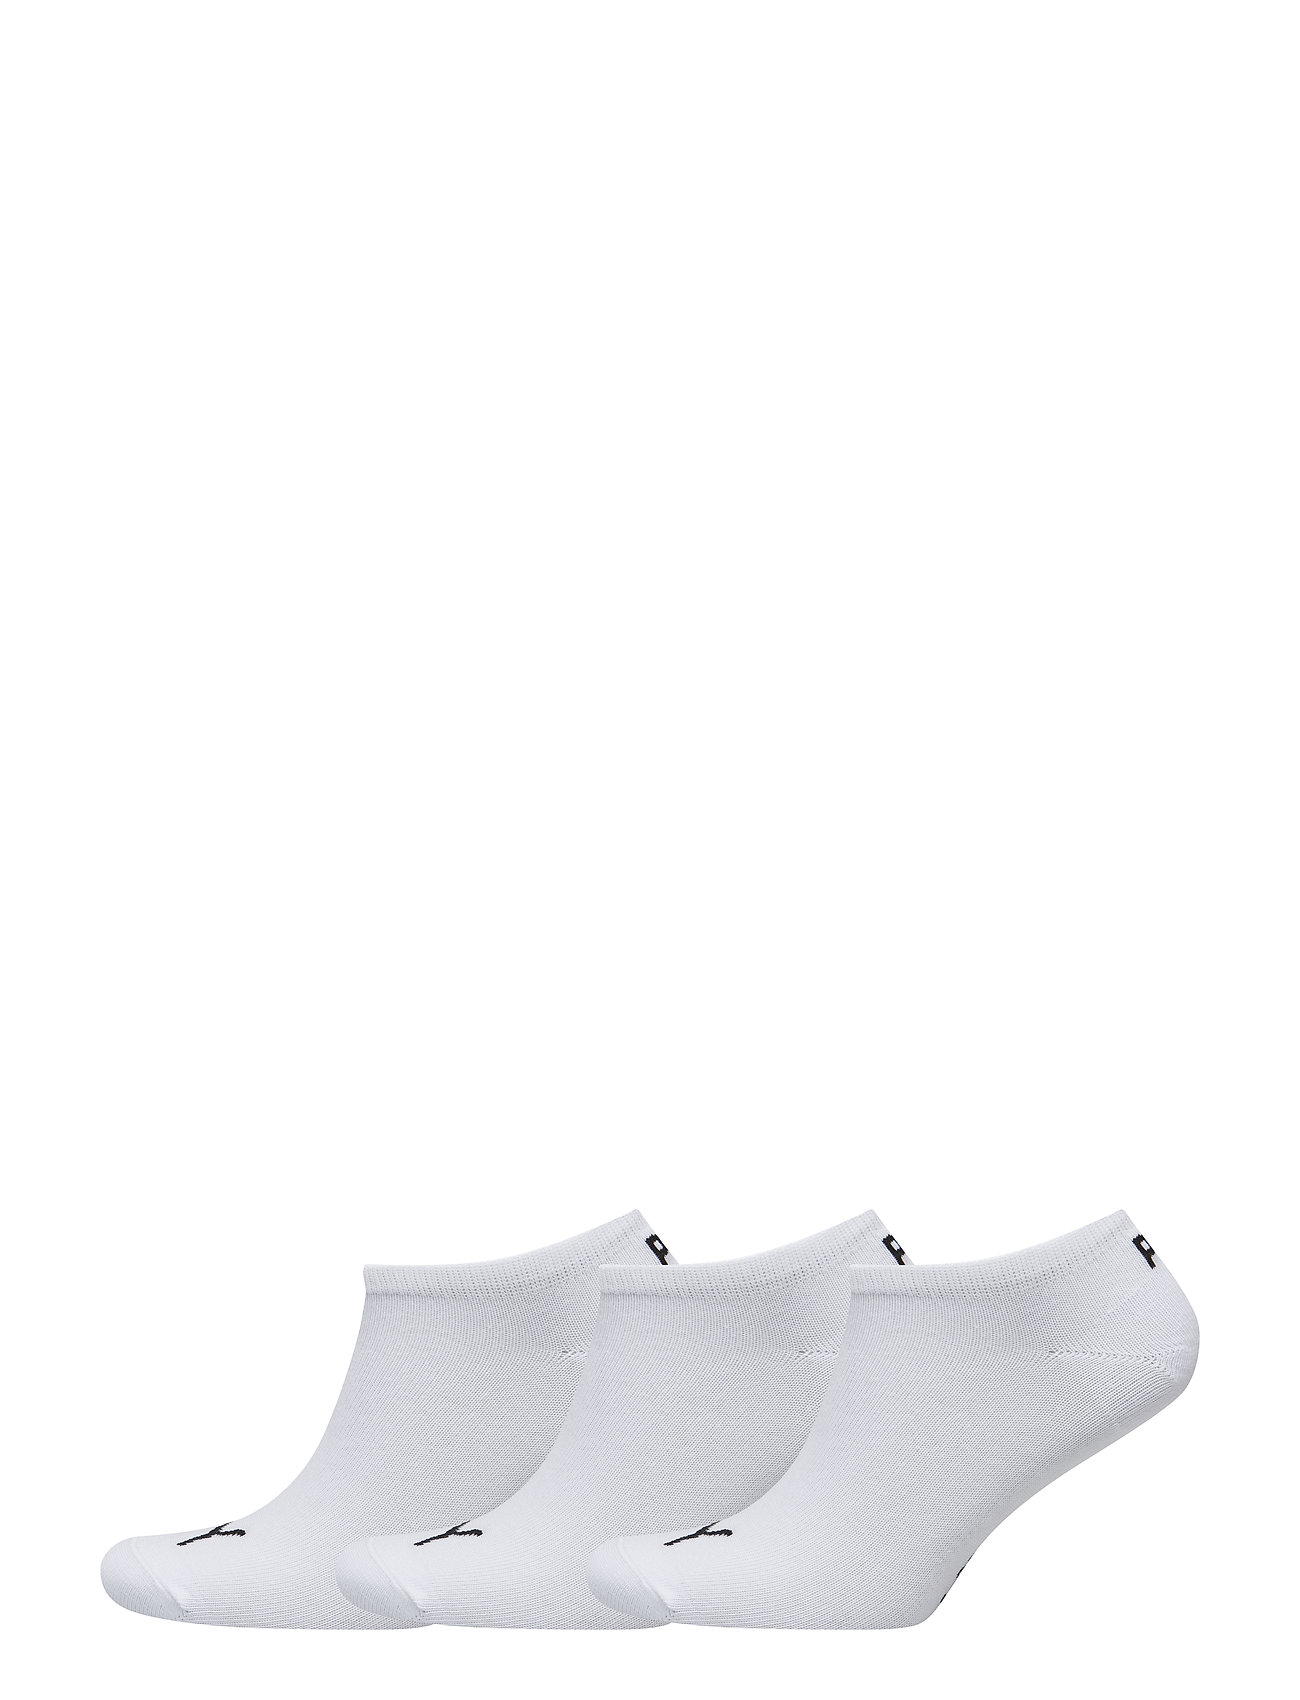 puma plain white shoes